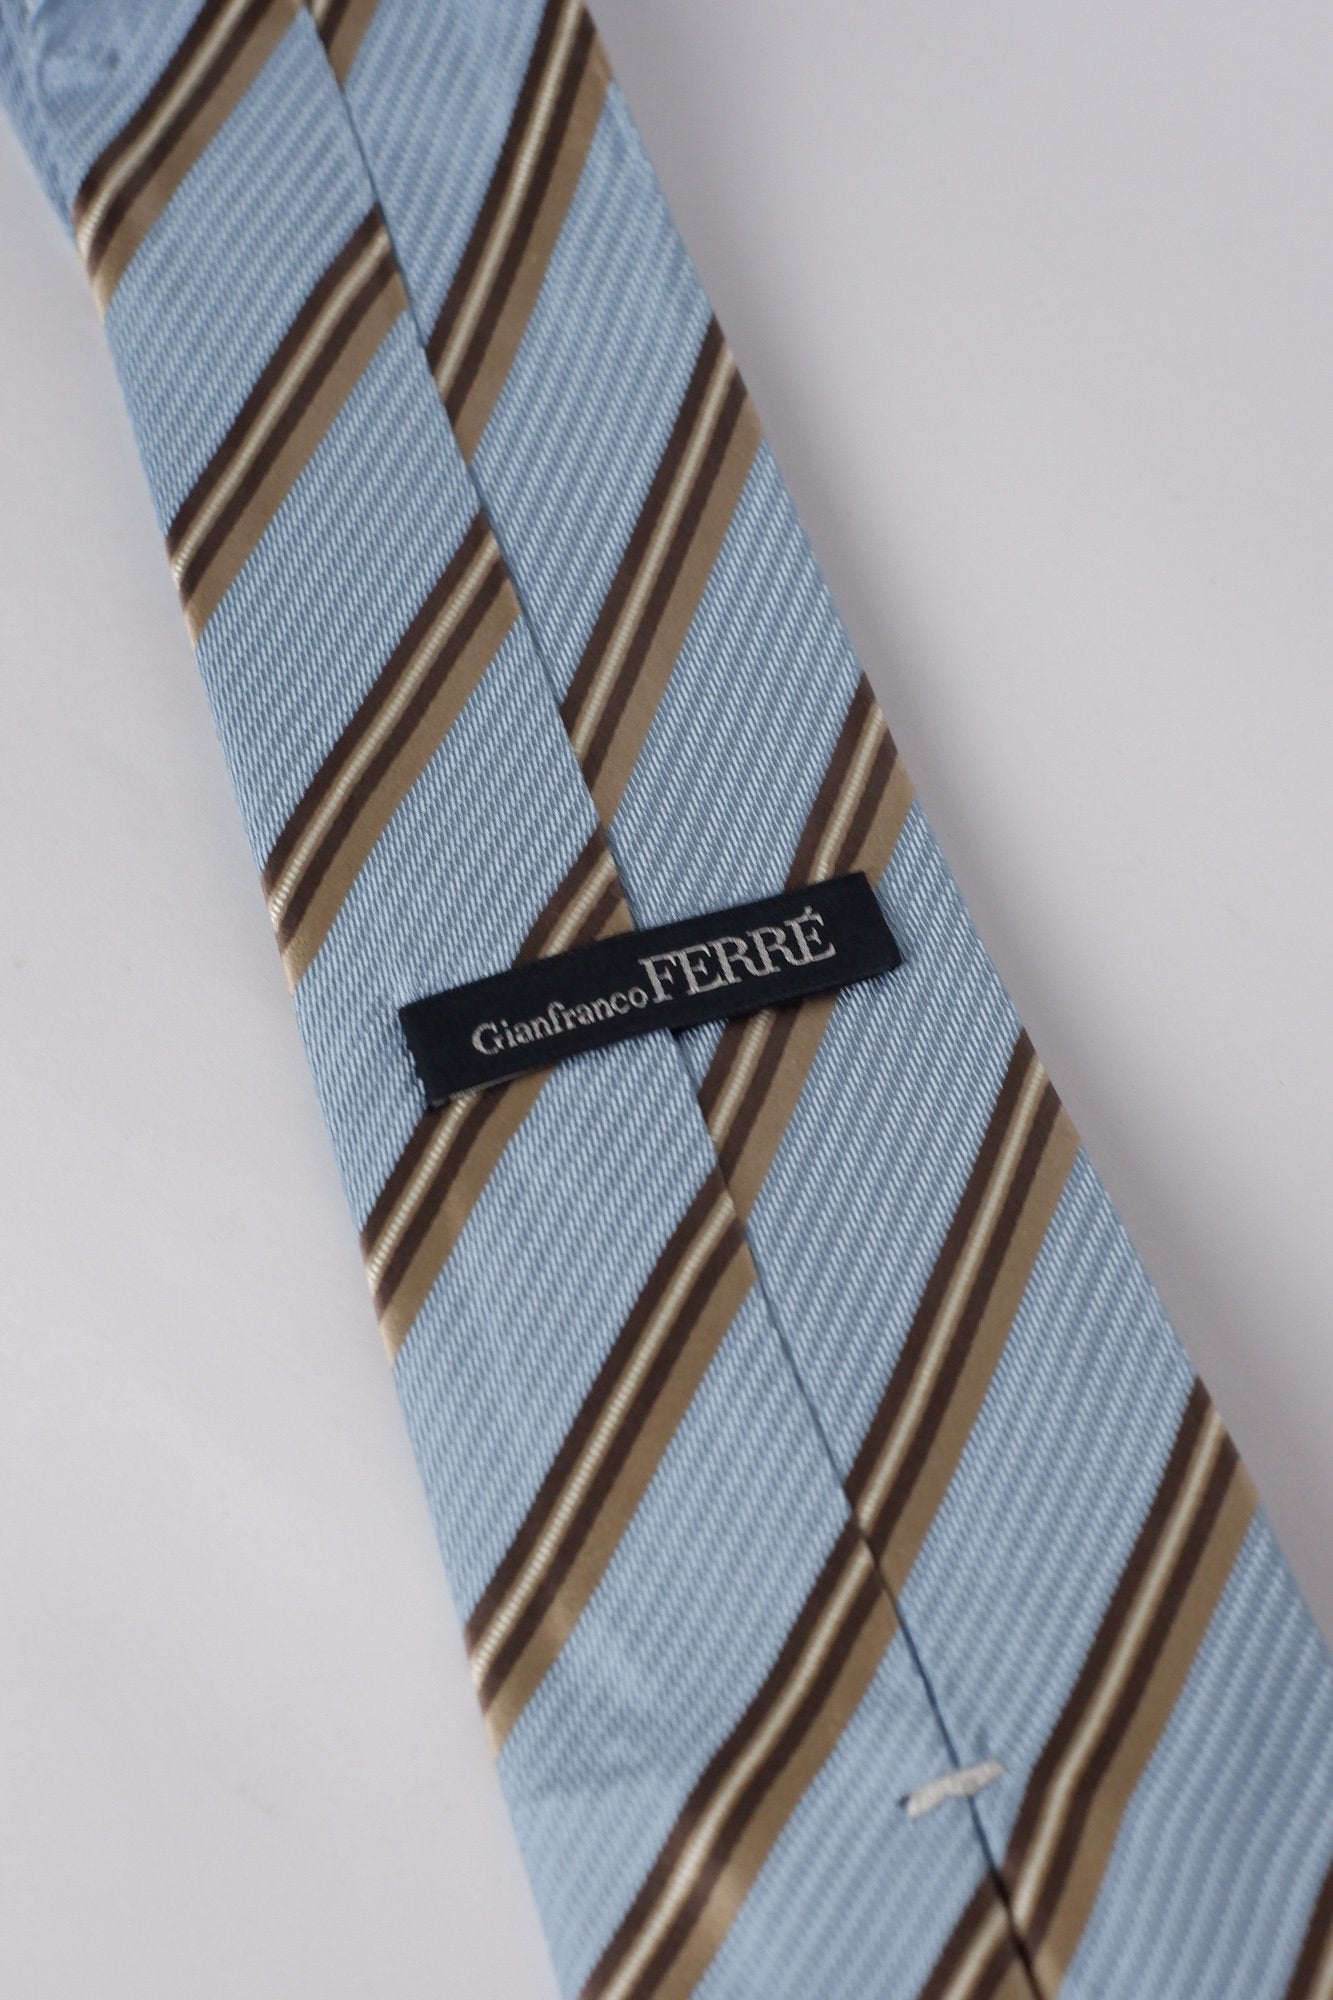 Gianfranco Ferrè Light Blue with Gold Stripes Necktie